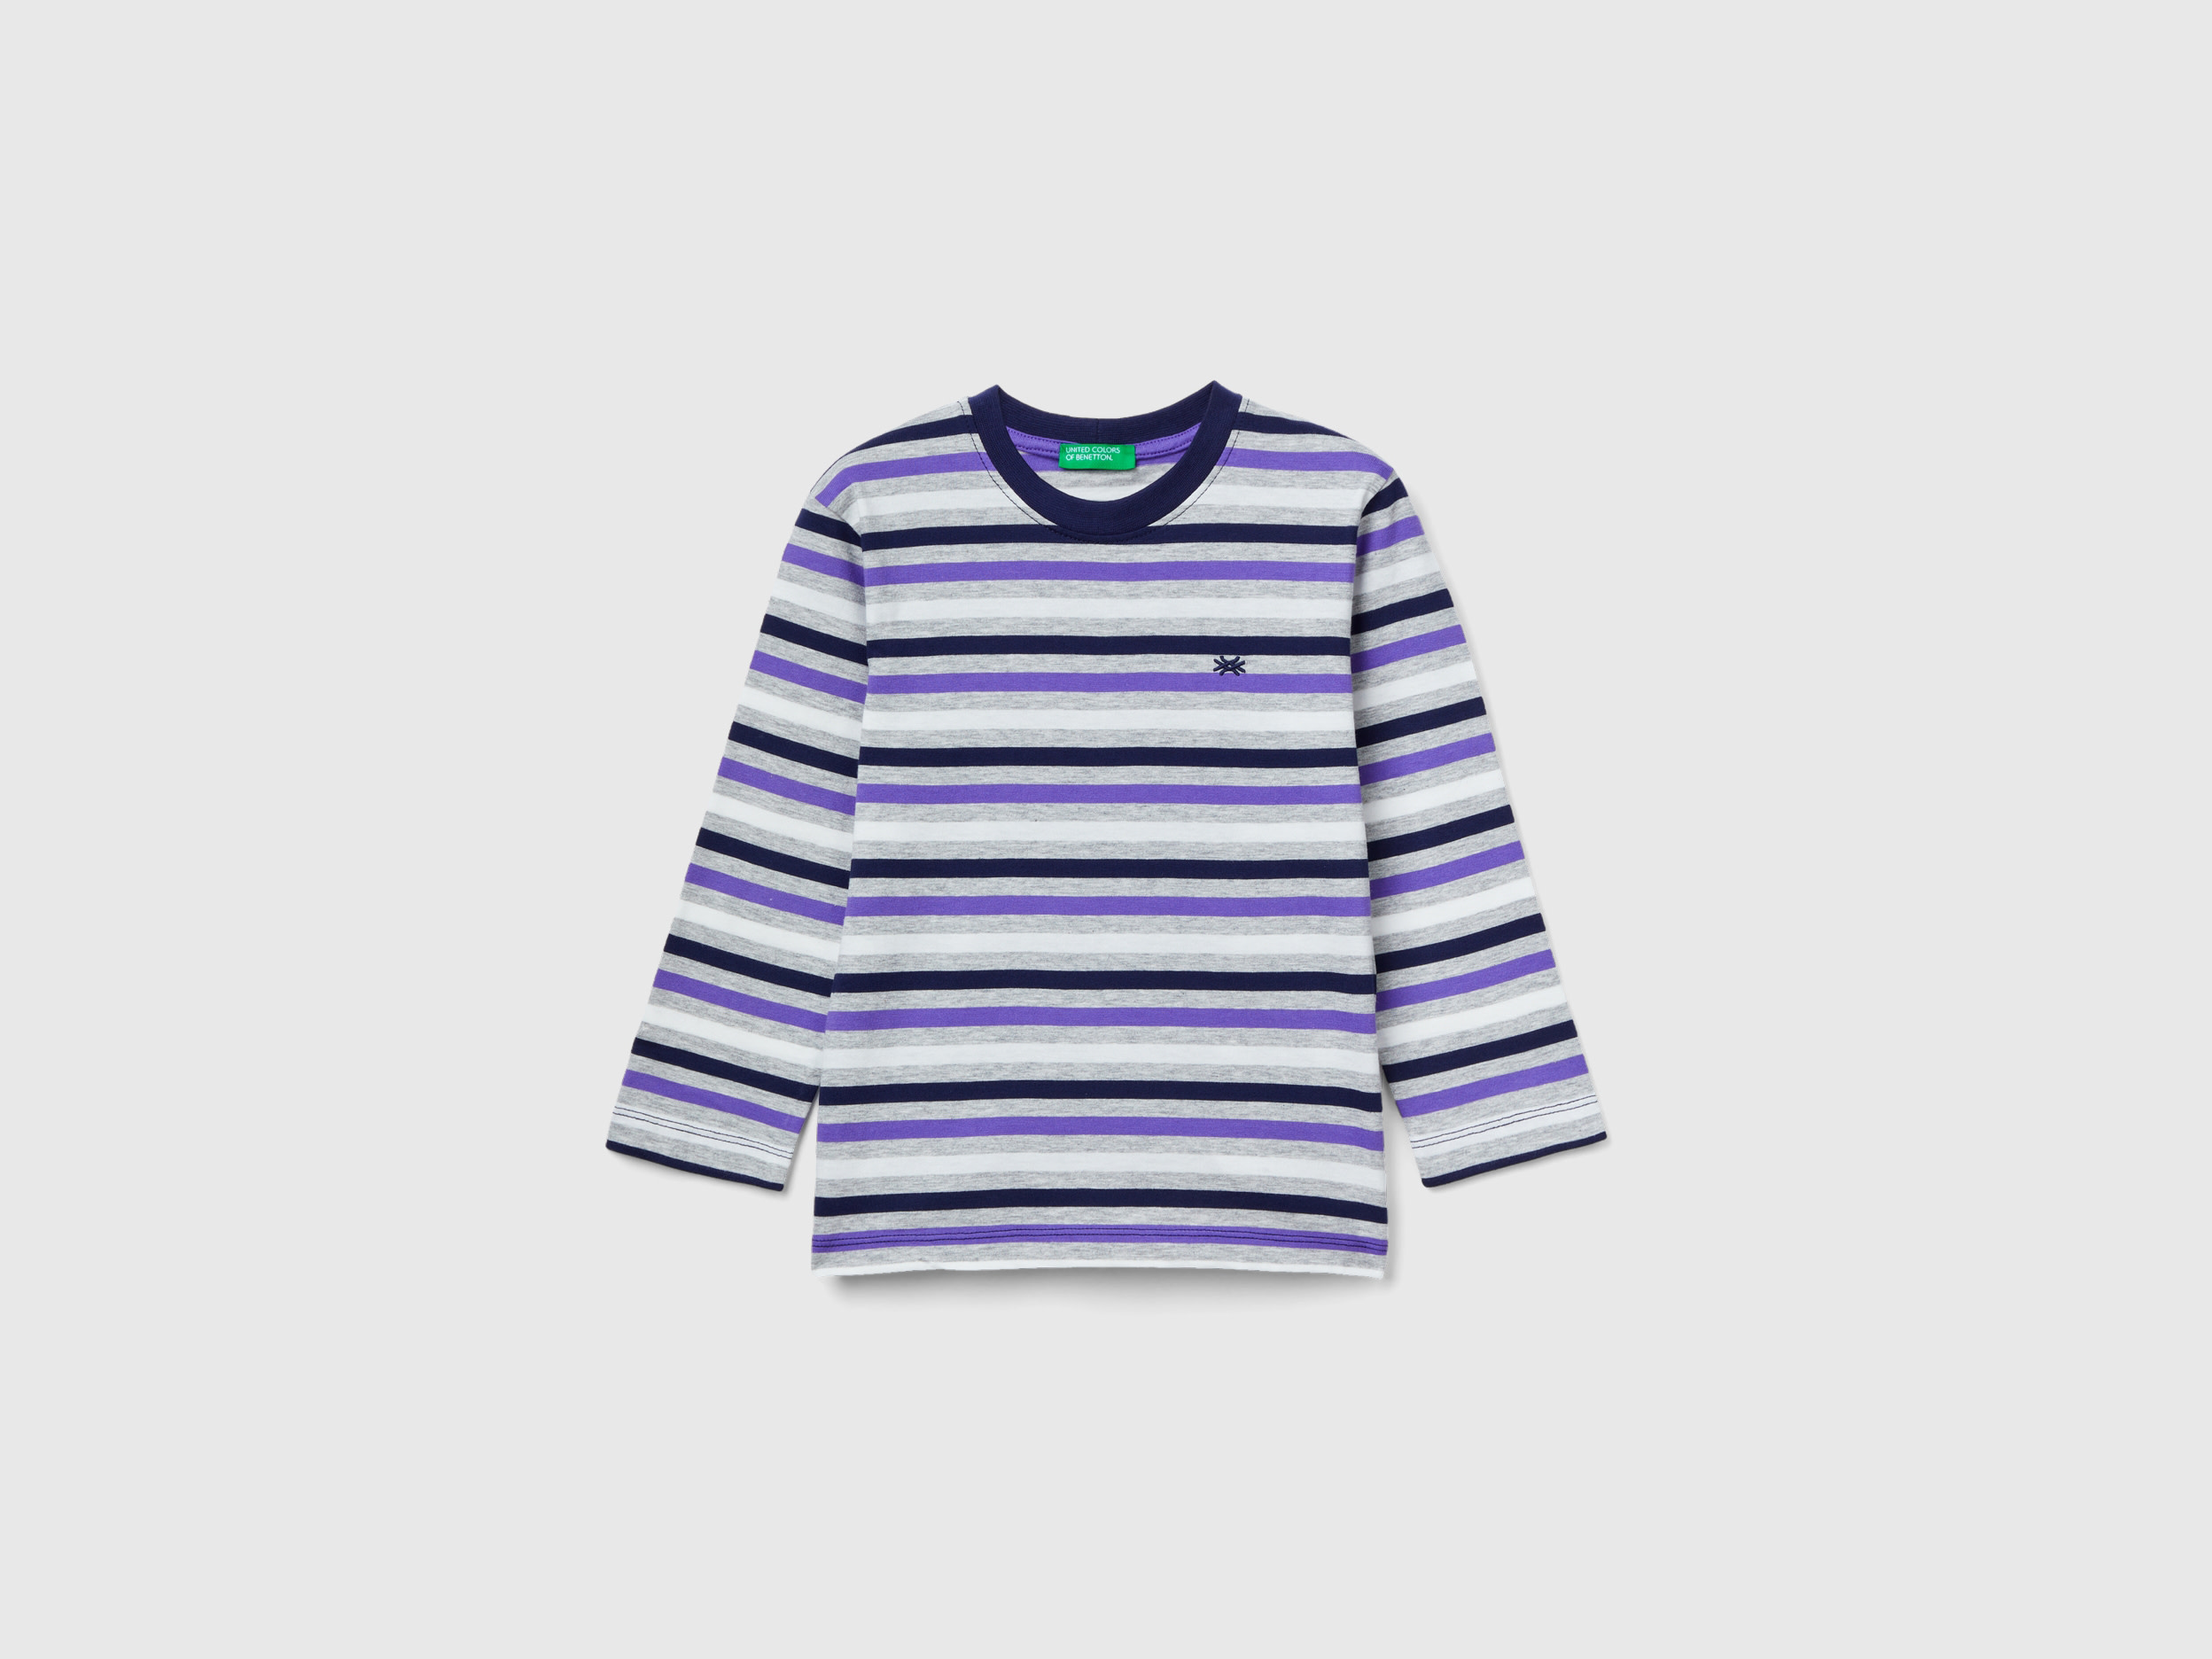 Benetton, Striped T-shirt In 100% Cotton, size 4-5, Multi-color, Kids